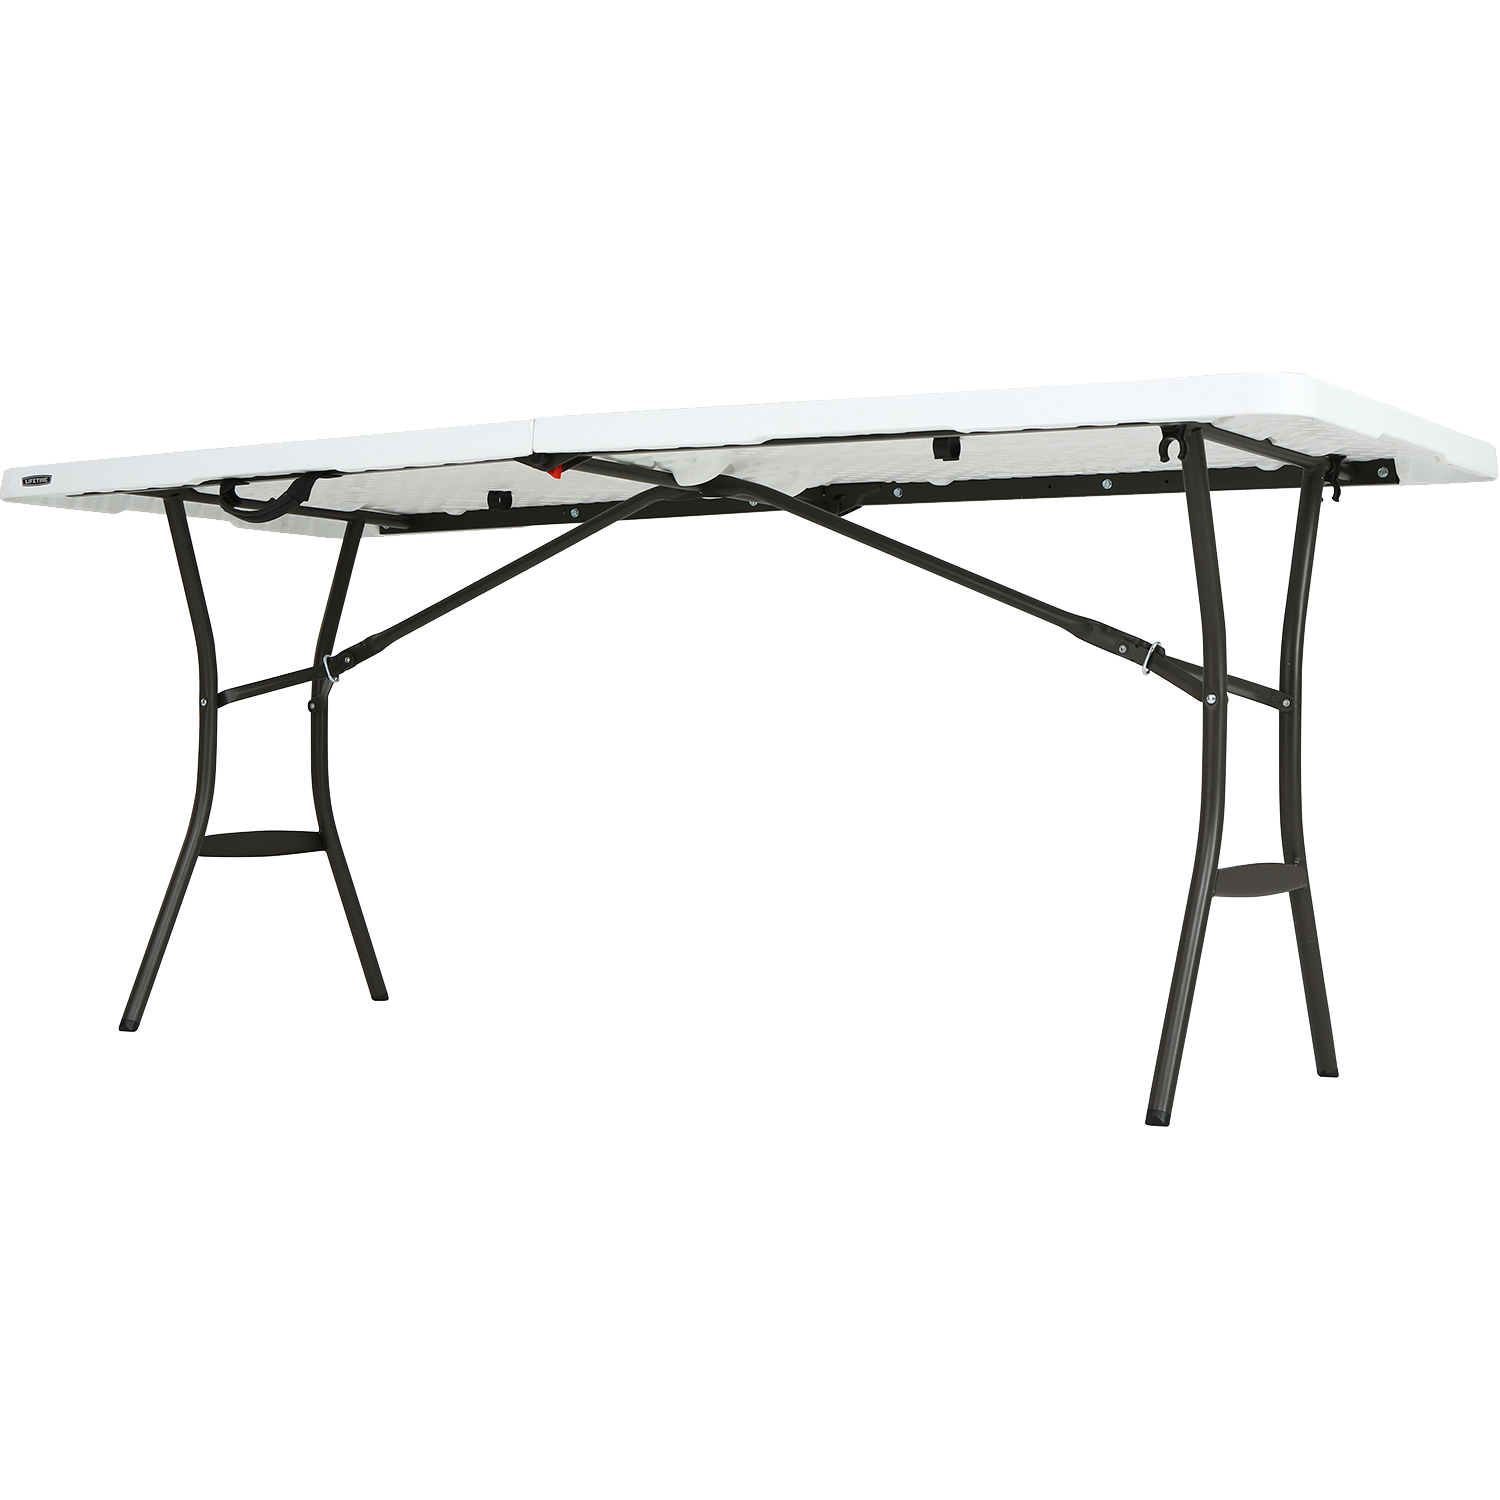 Lifetime folding table Amy (182x76x74cm)